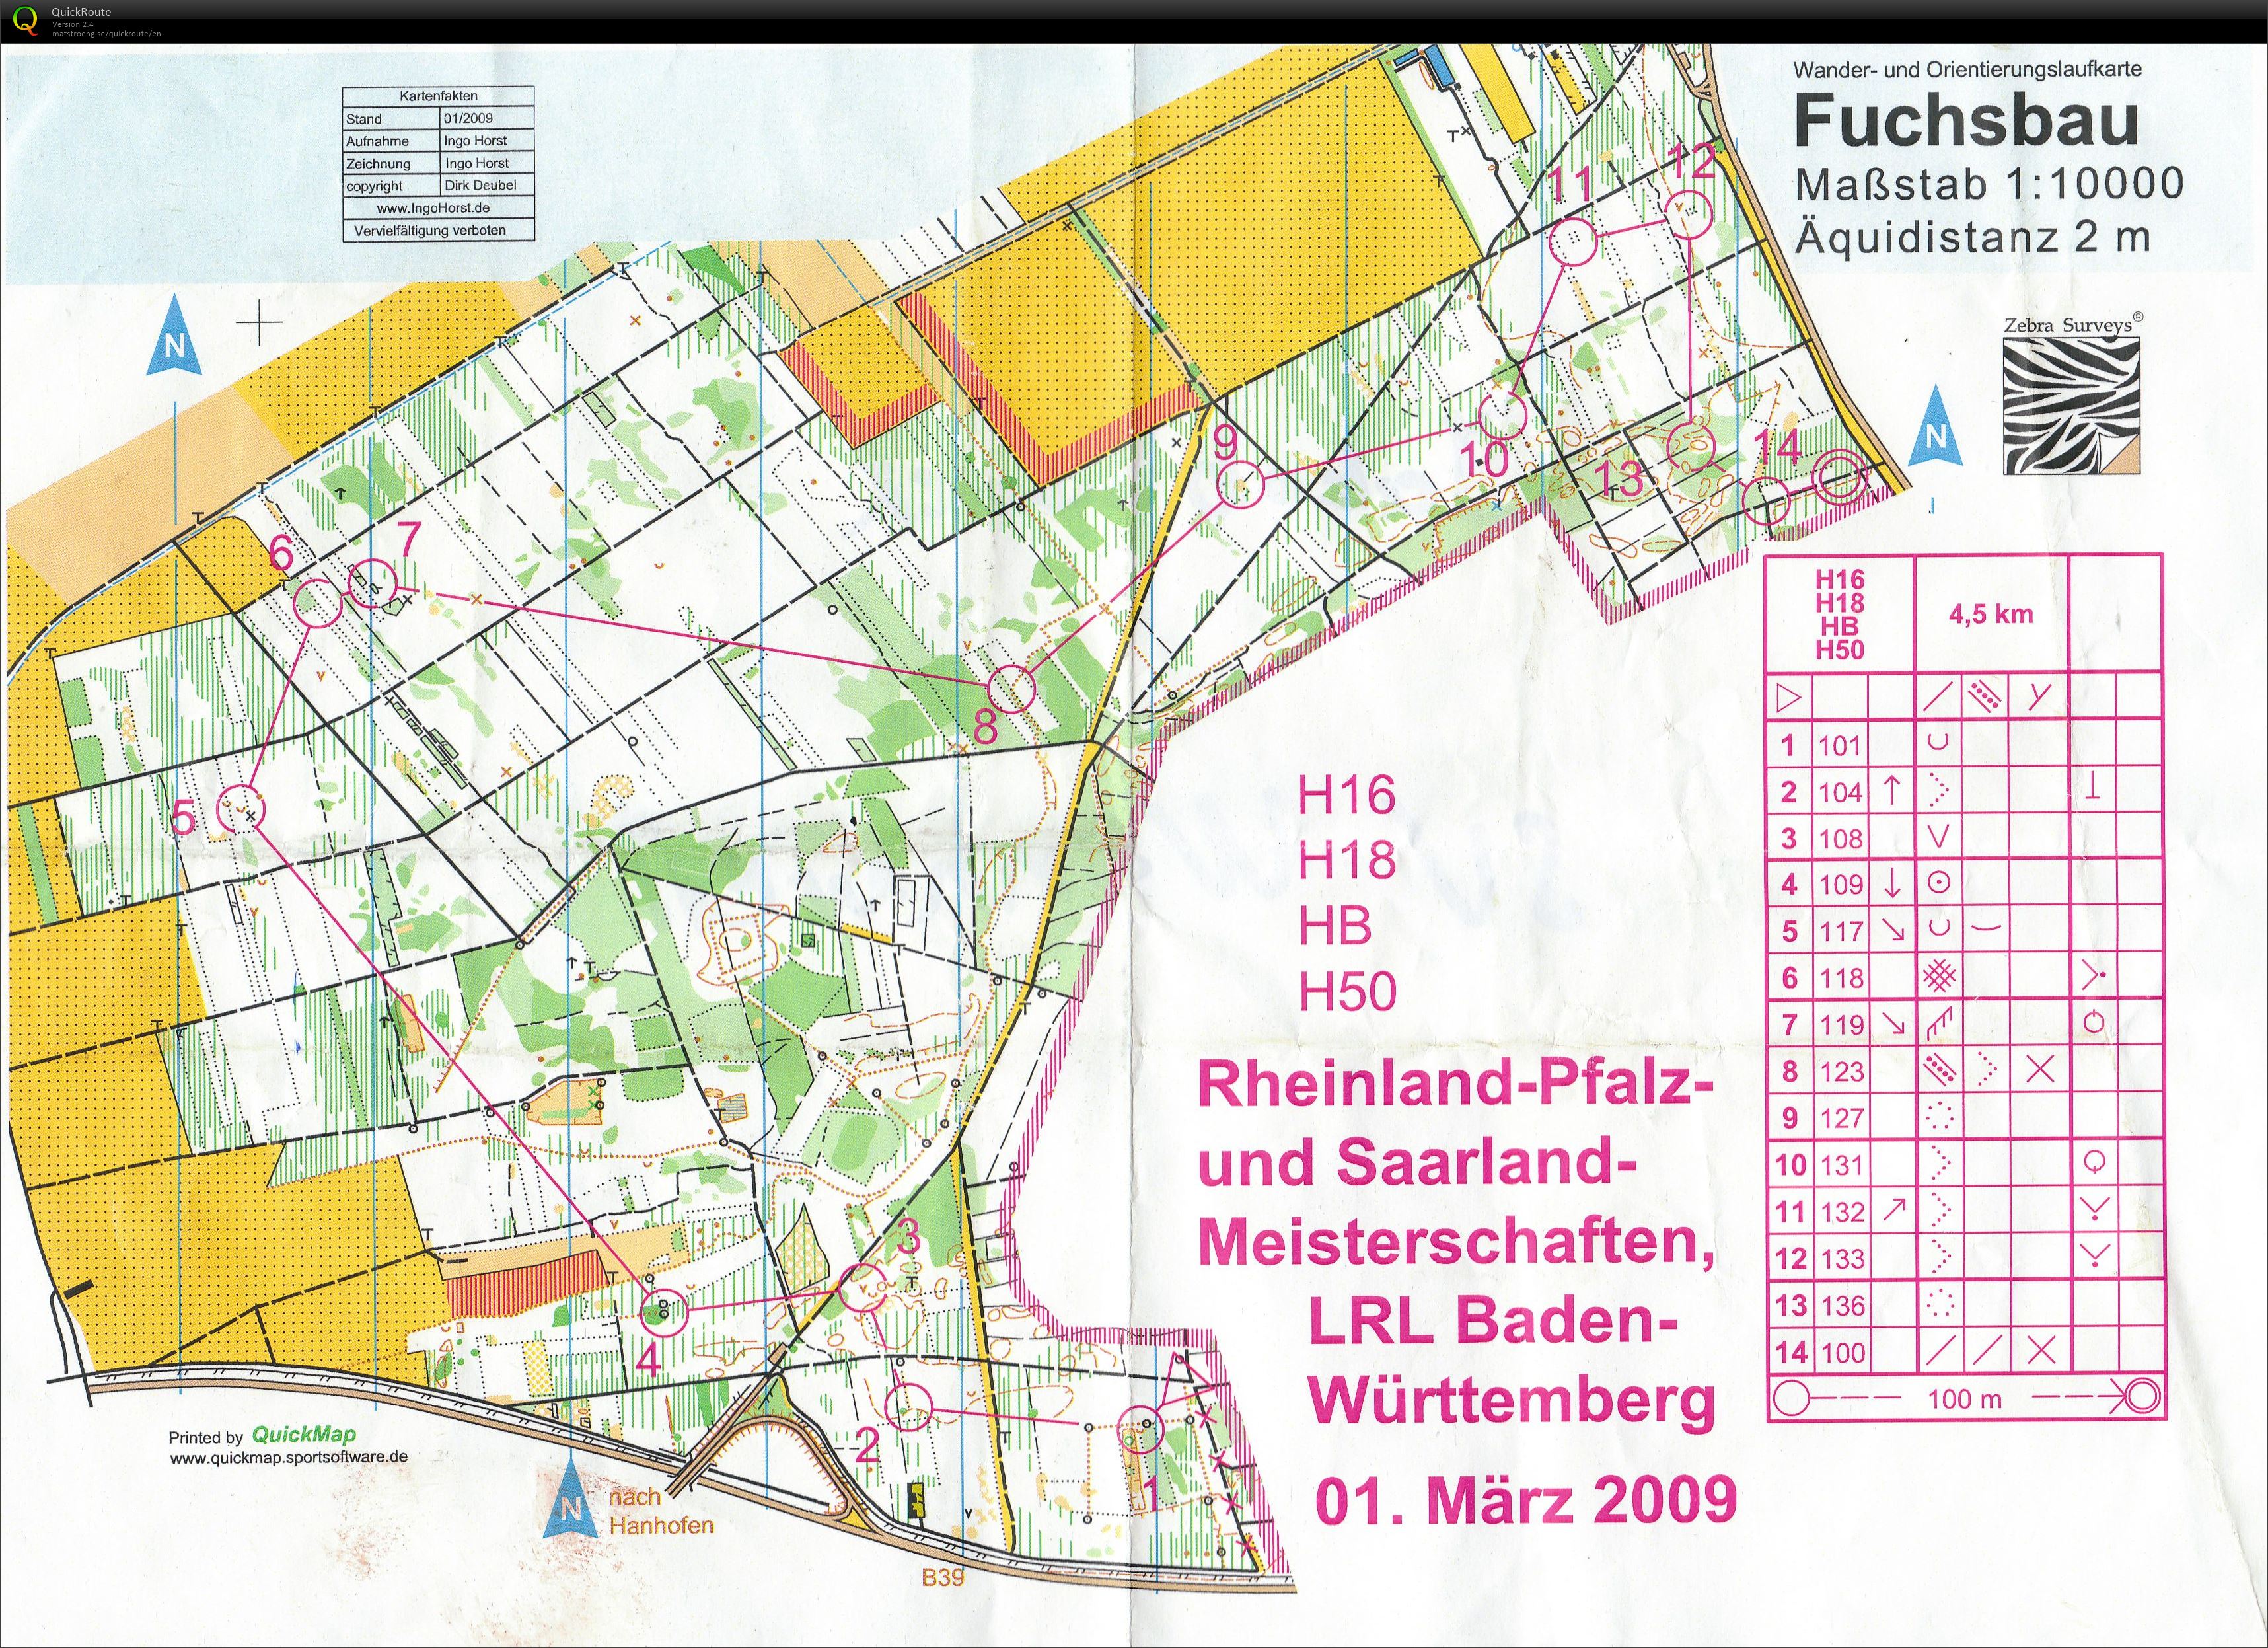 Regional Ranking Event Baden-Württemberg (01/03/2009)